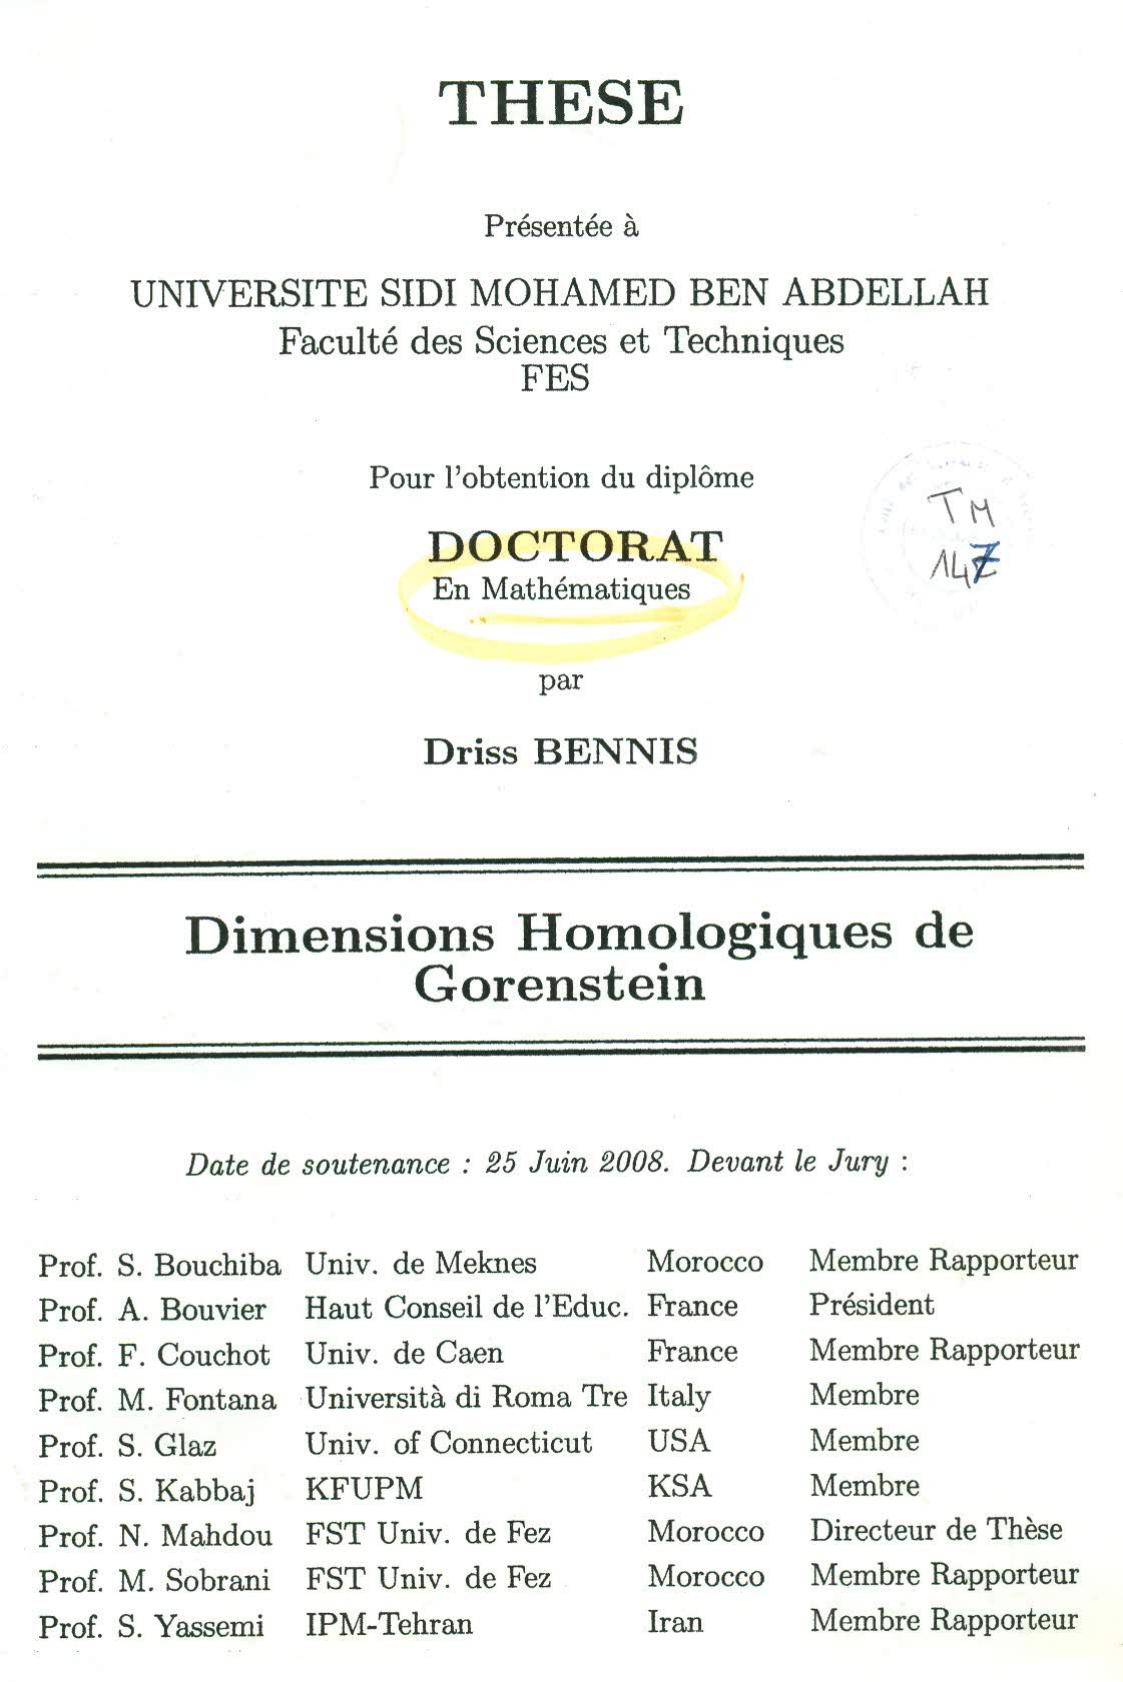 Dimensions homologiques de Gorenstein